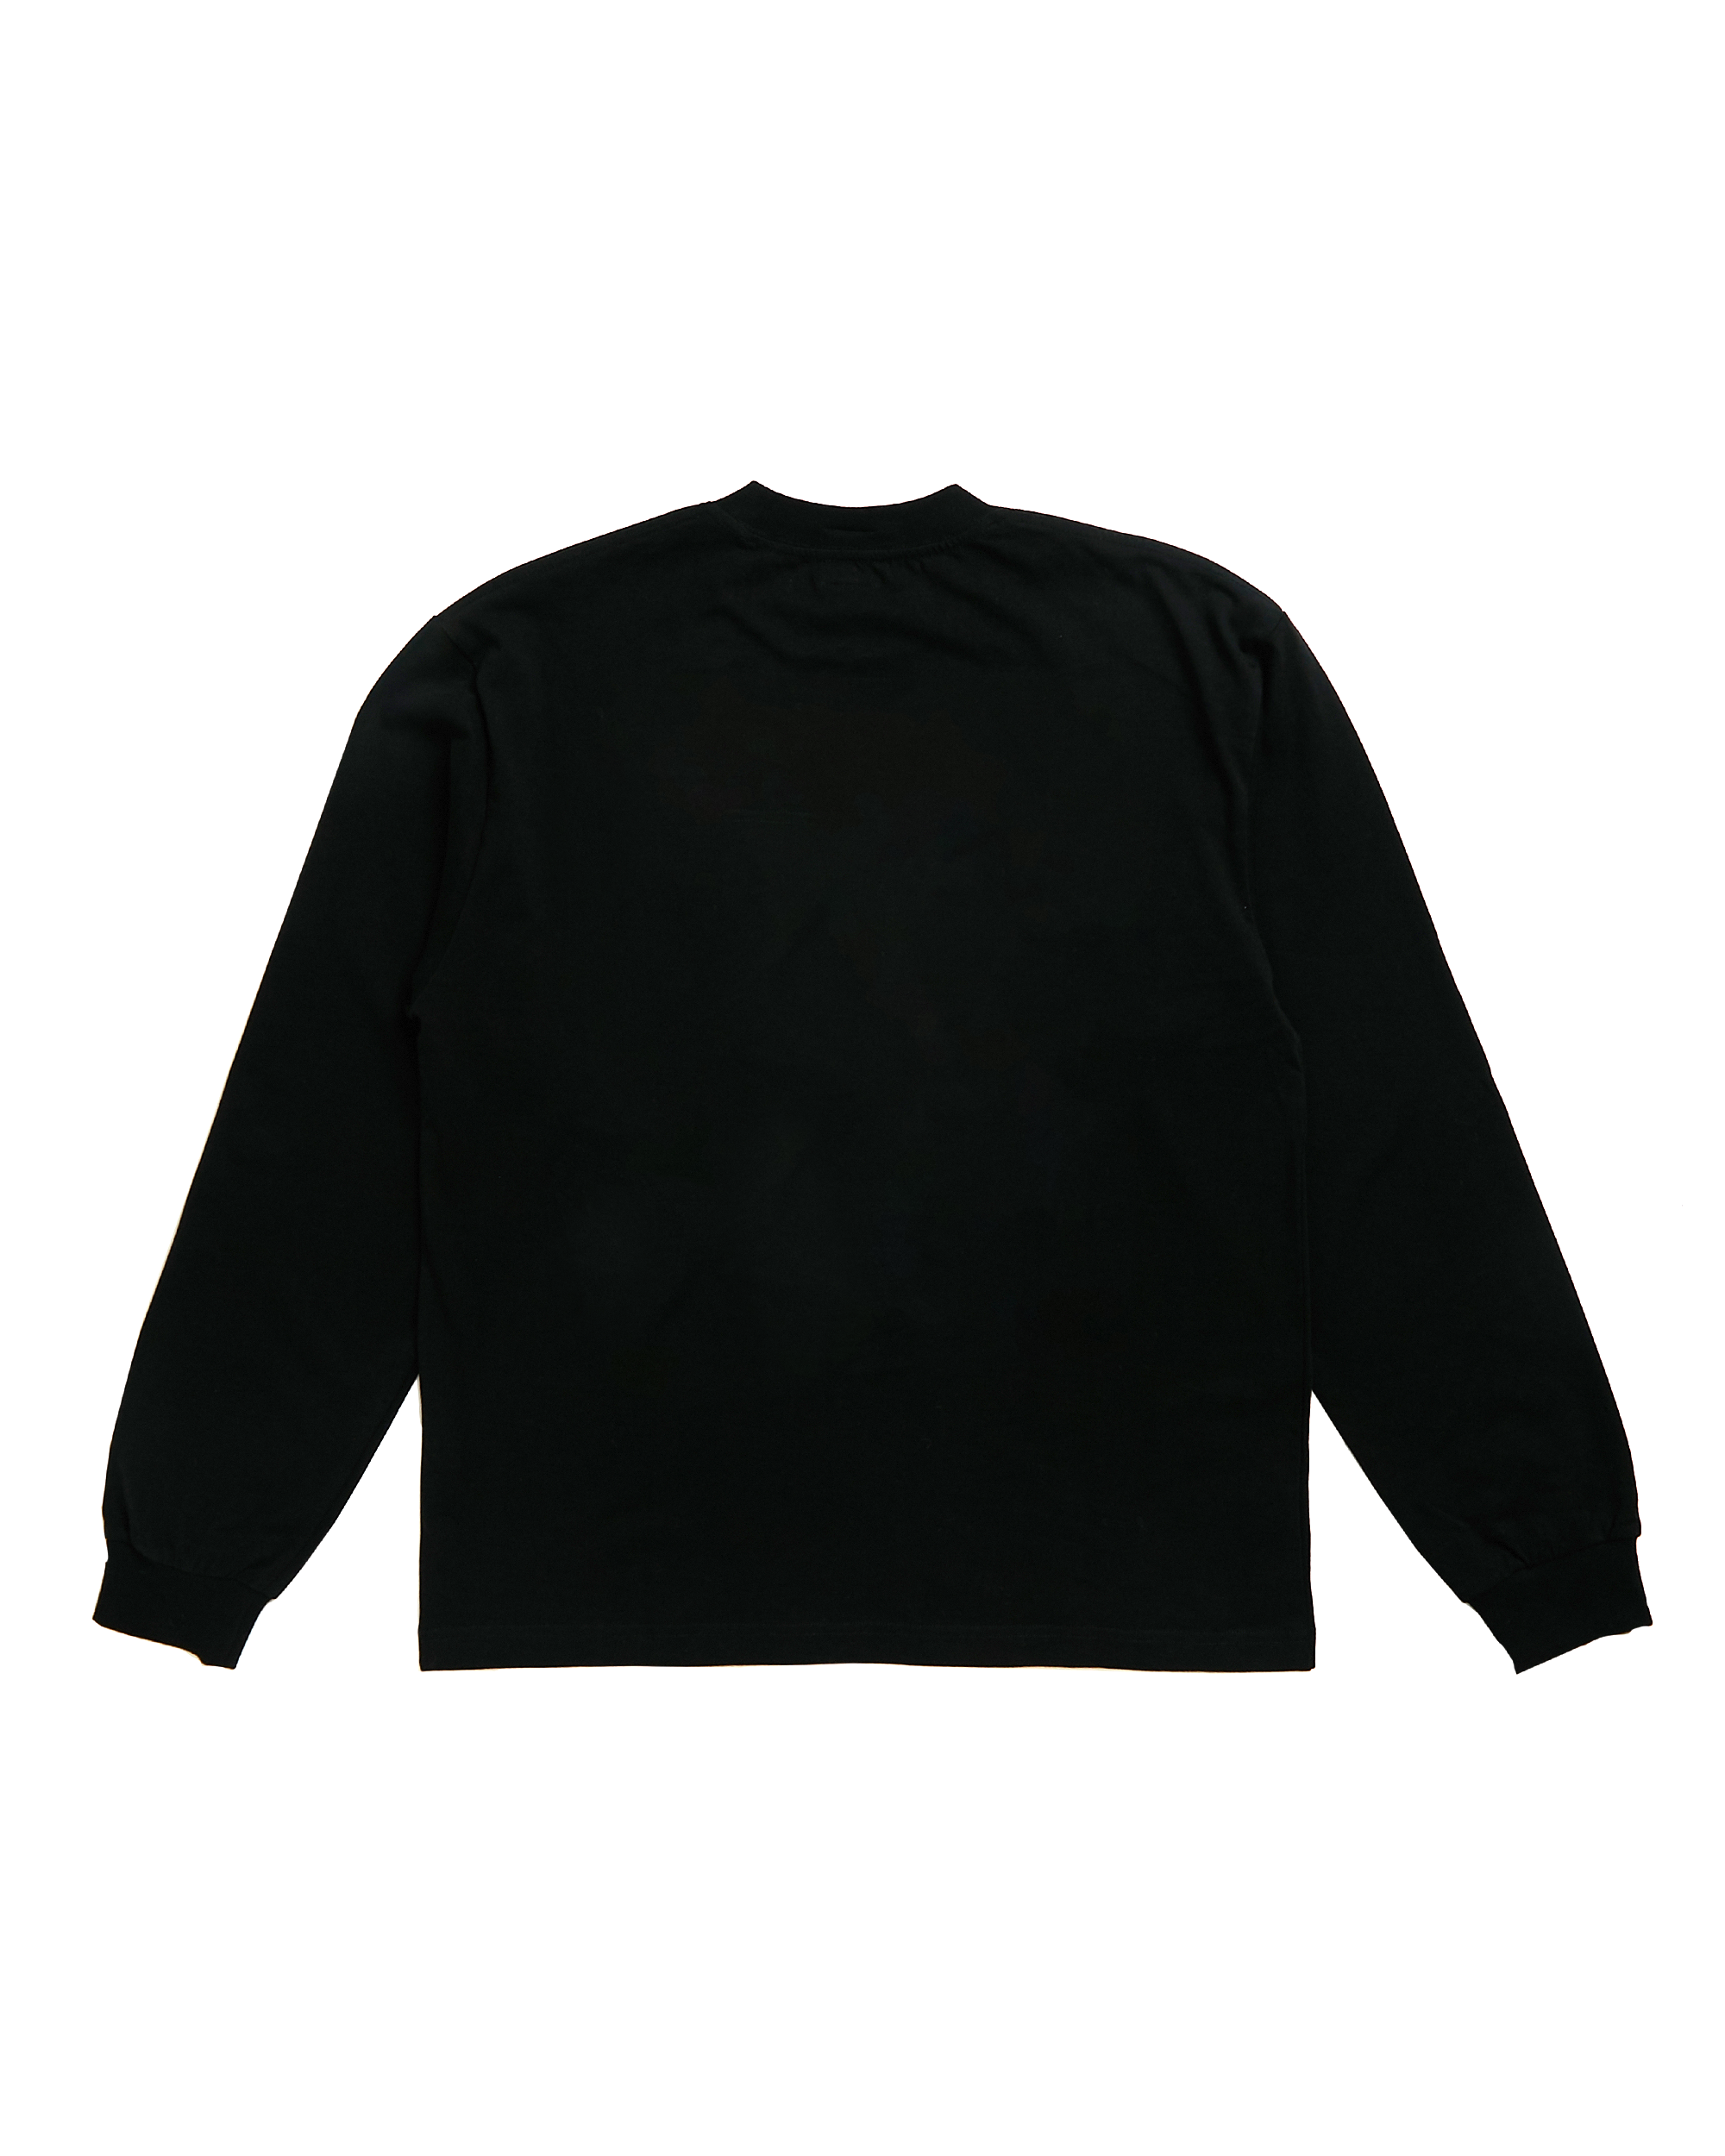 Costermonger L/S T-shirt - Black